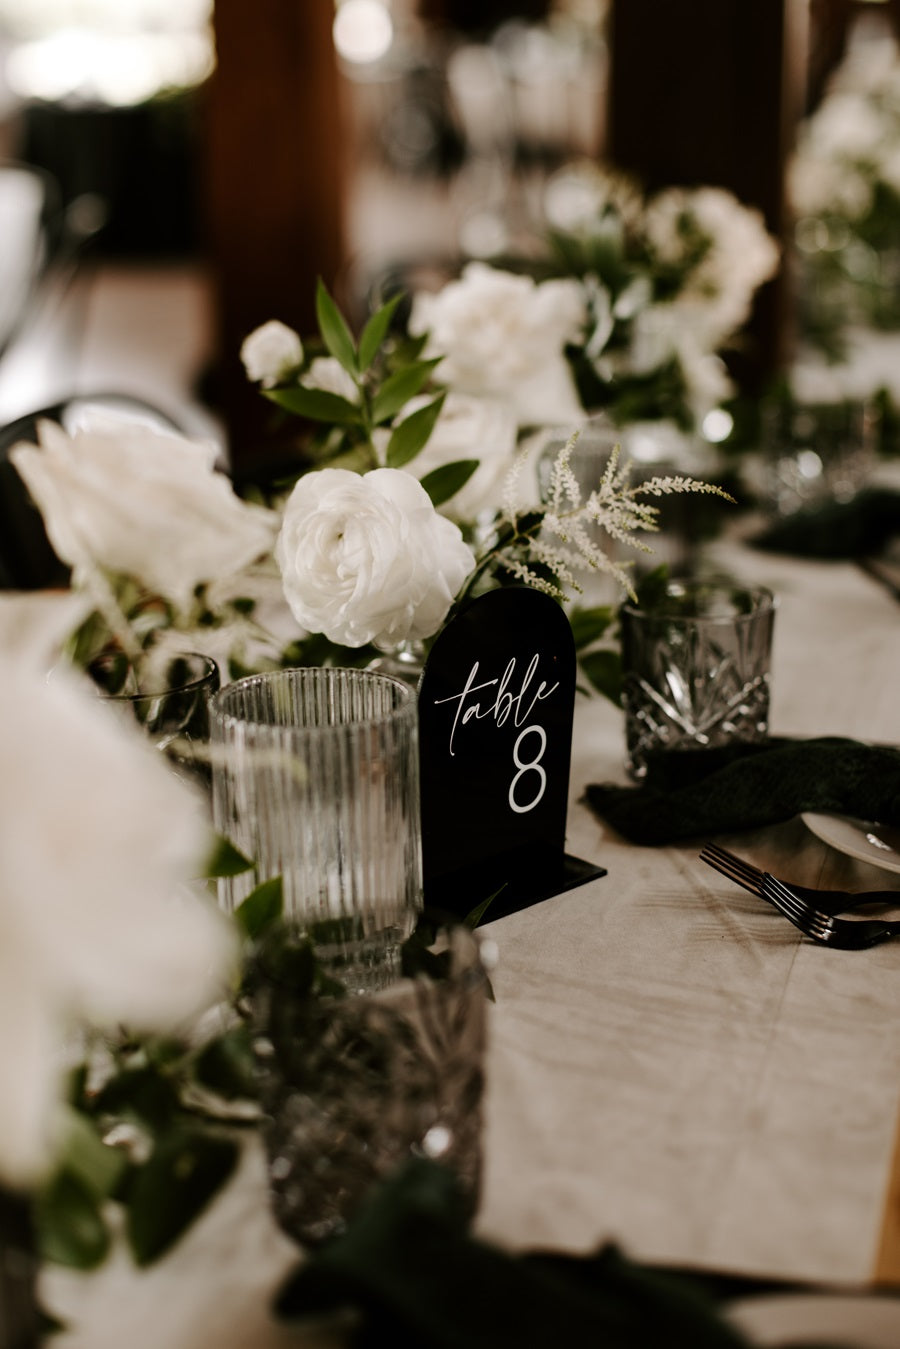 Close up of a floral arrangement centerpiece w/ votive candles and a black table number 8.